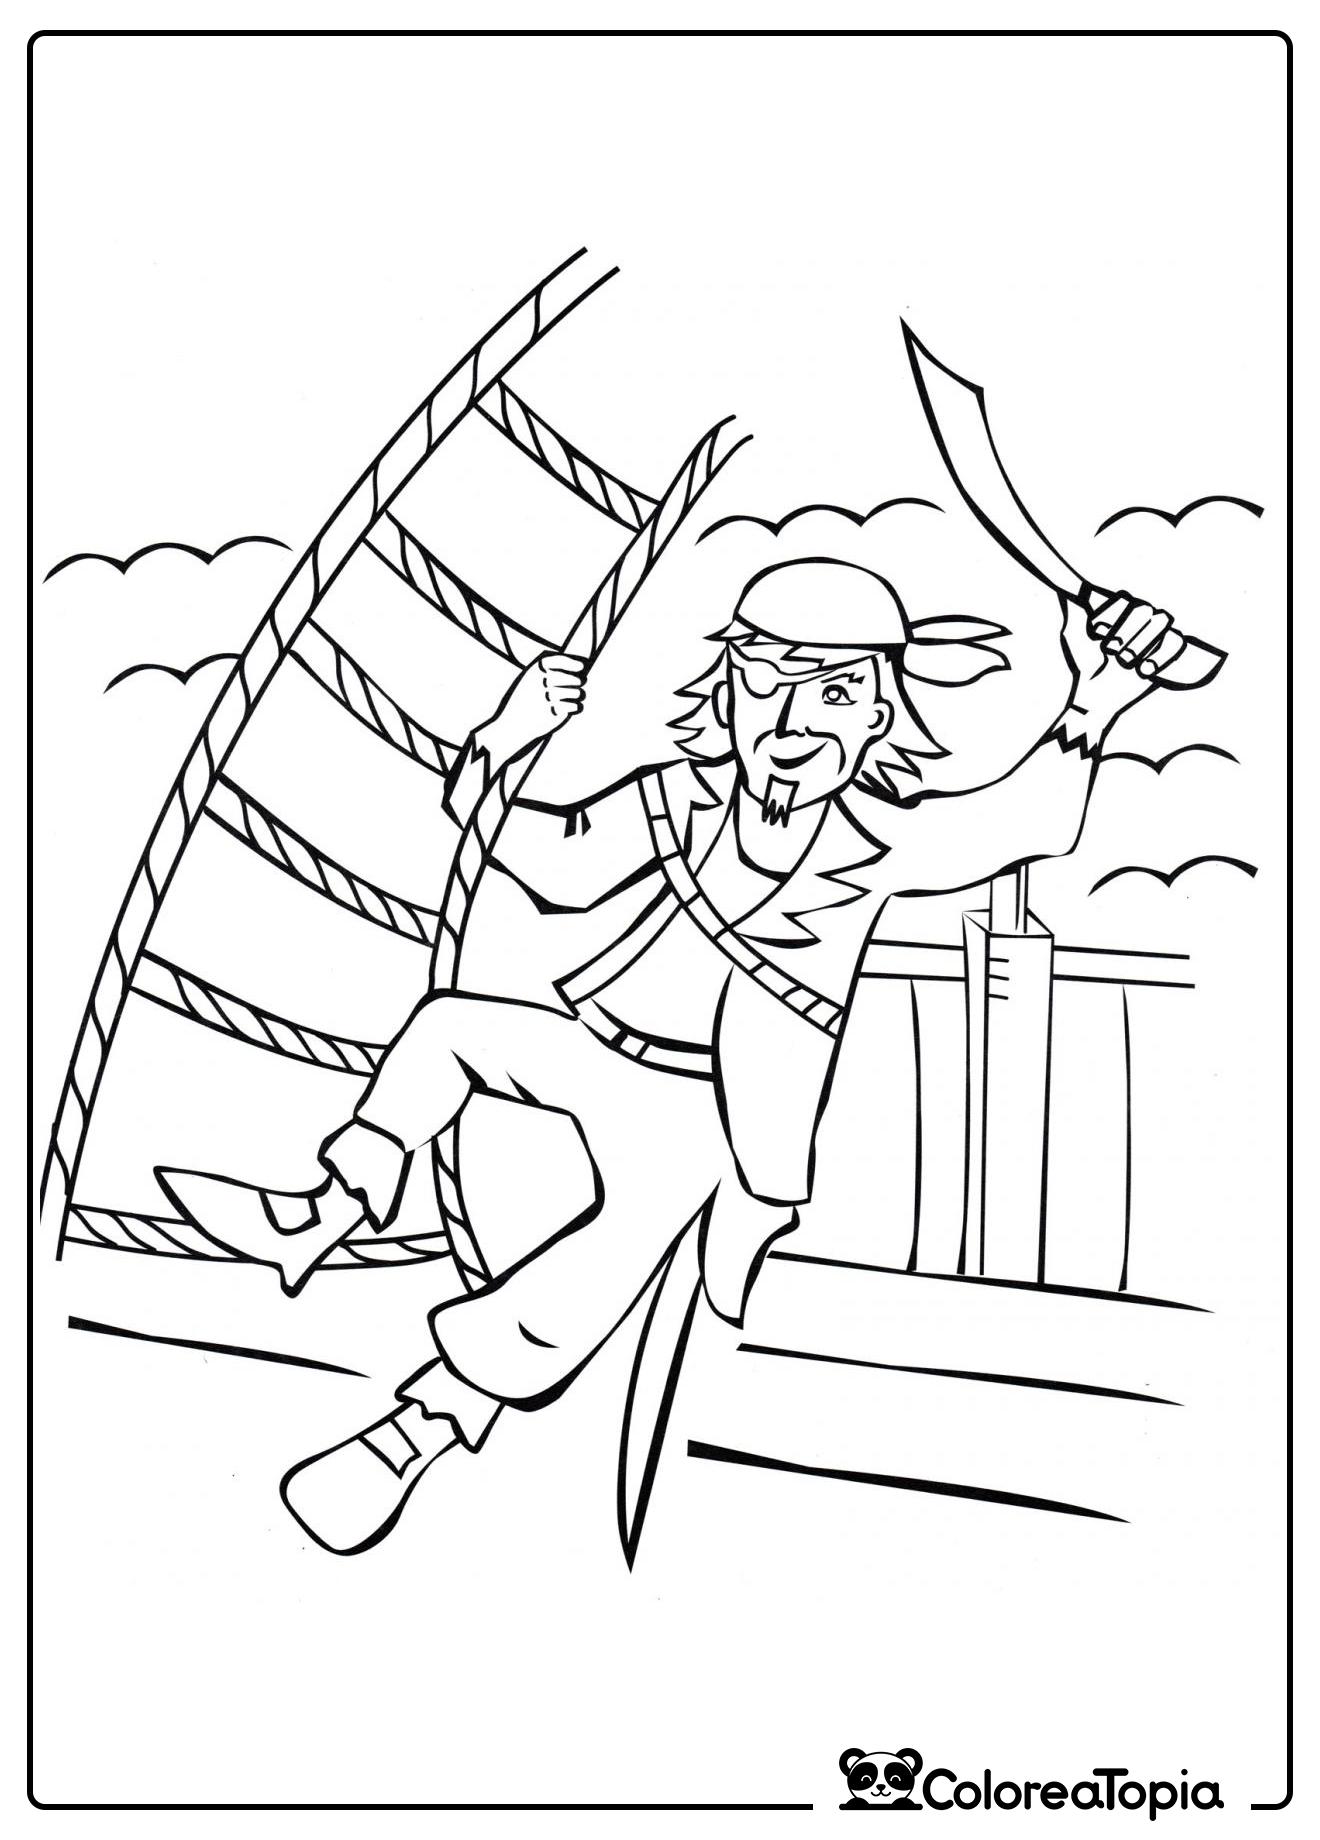 Pirata con espada - dibujo para colorear